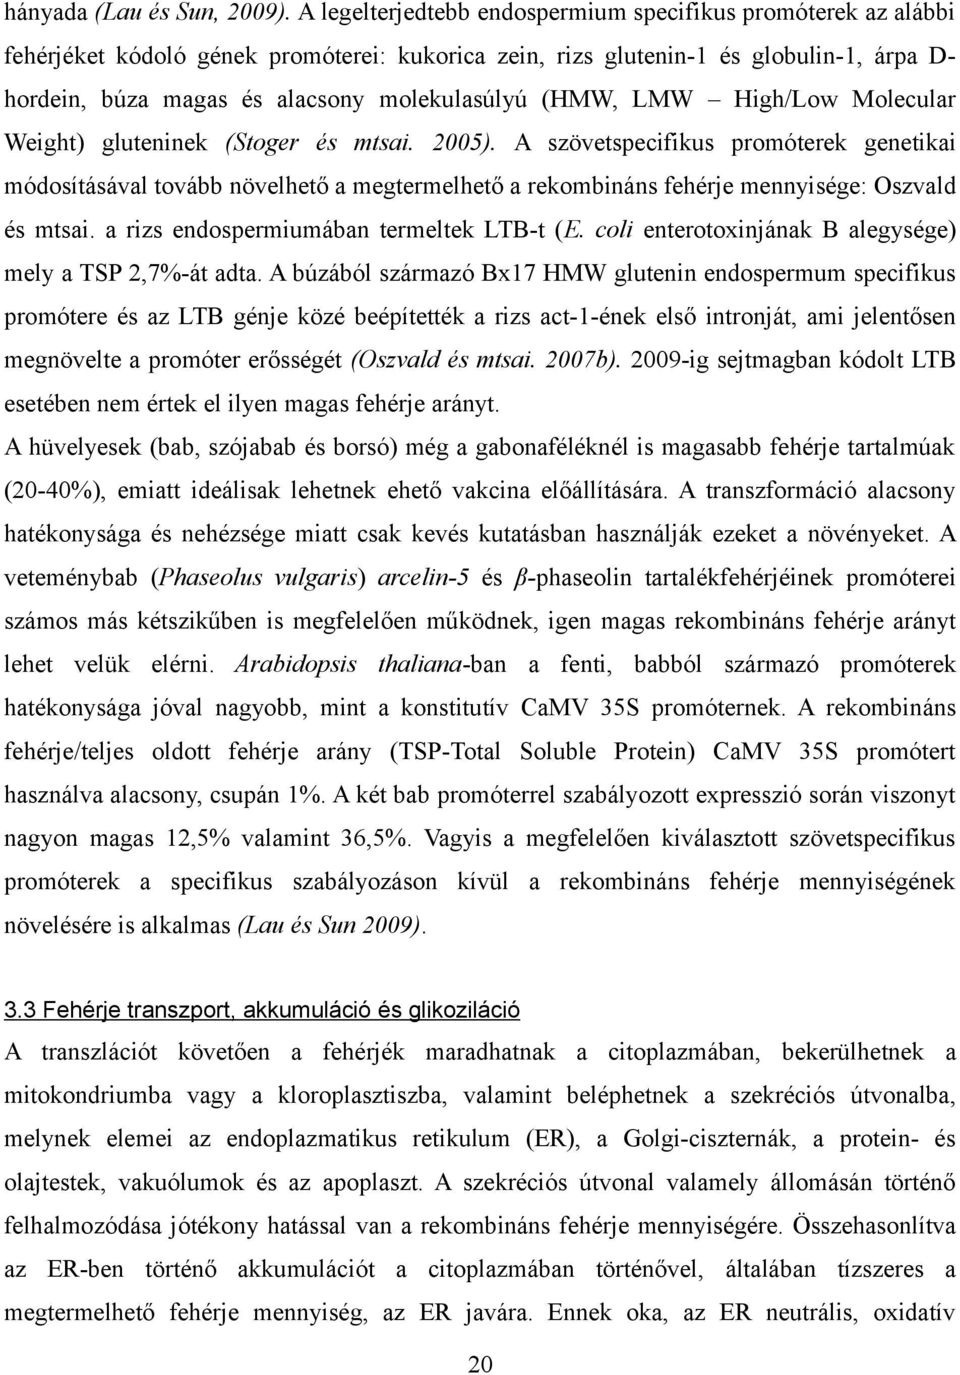 (HMW, LMW High/Low Molecular Weight) gluteninek (Stoger és mtsai. 2005).